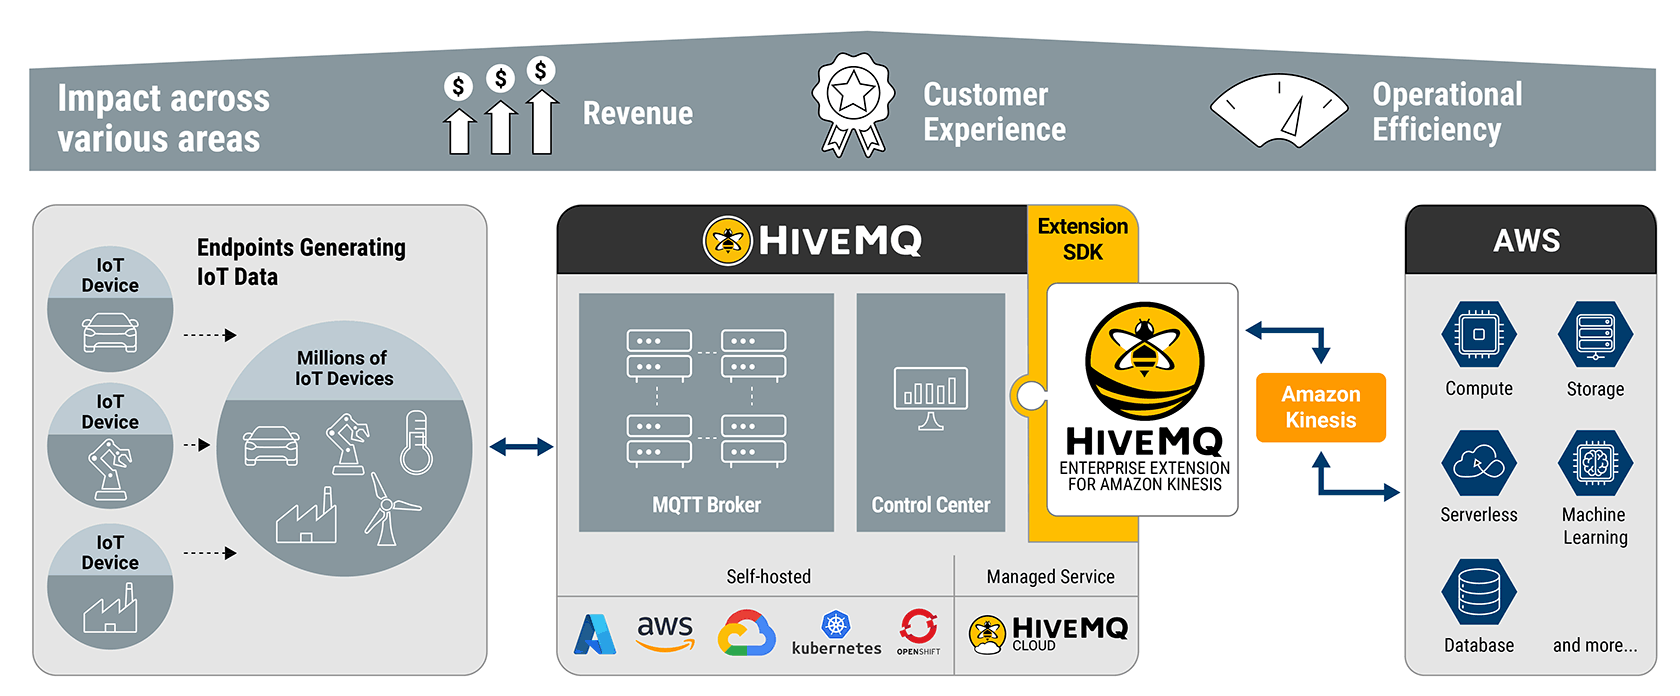 HiveMQ Enterprise Extension for Amazon Kinesis